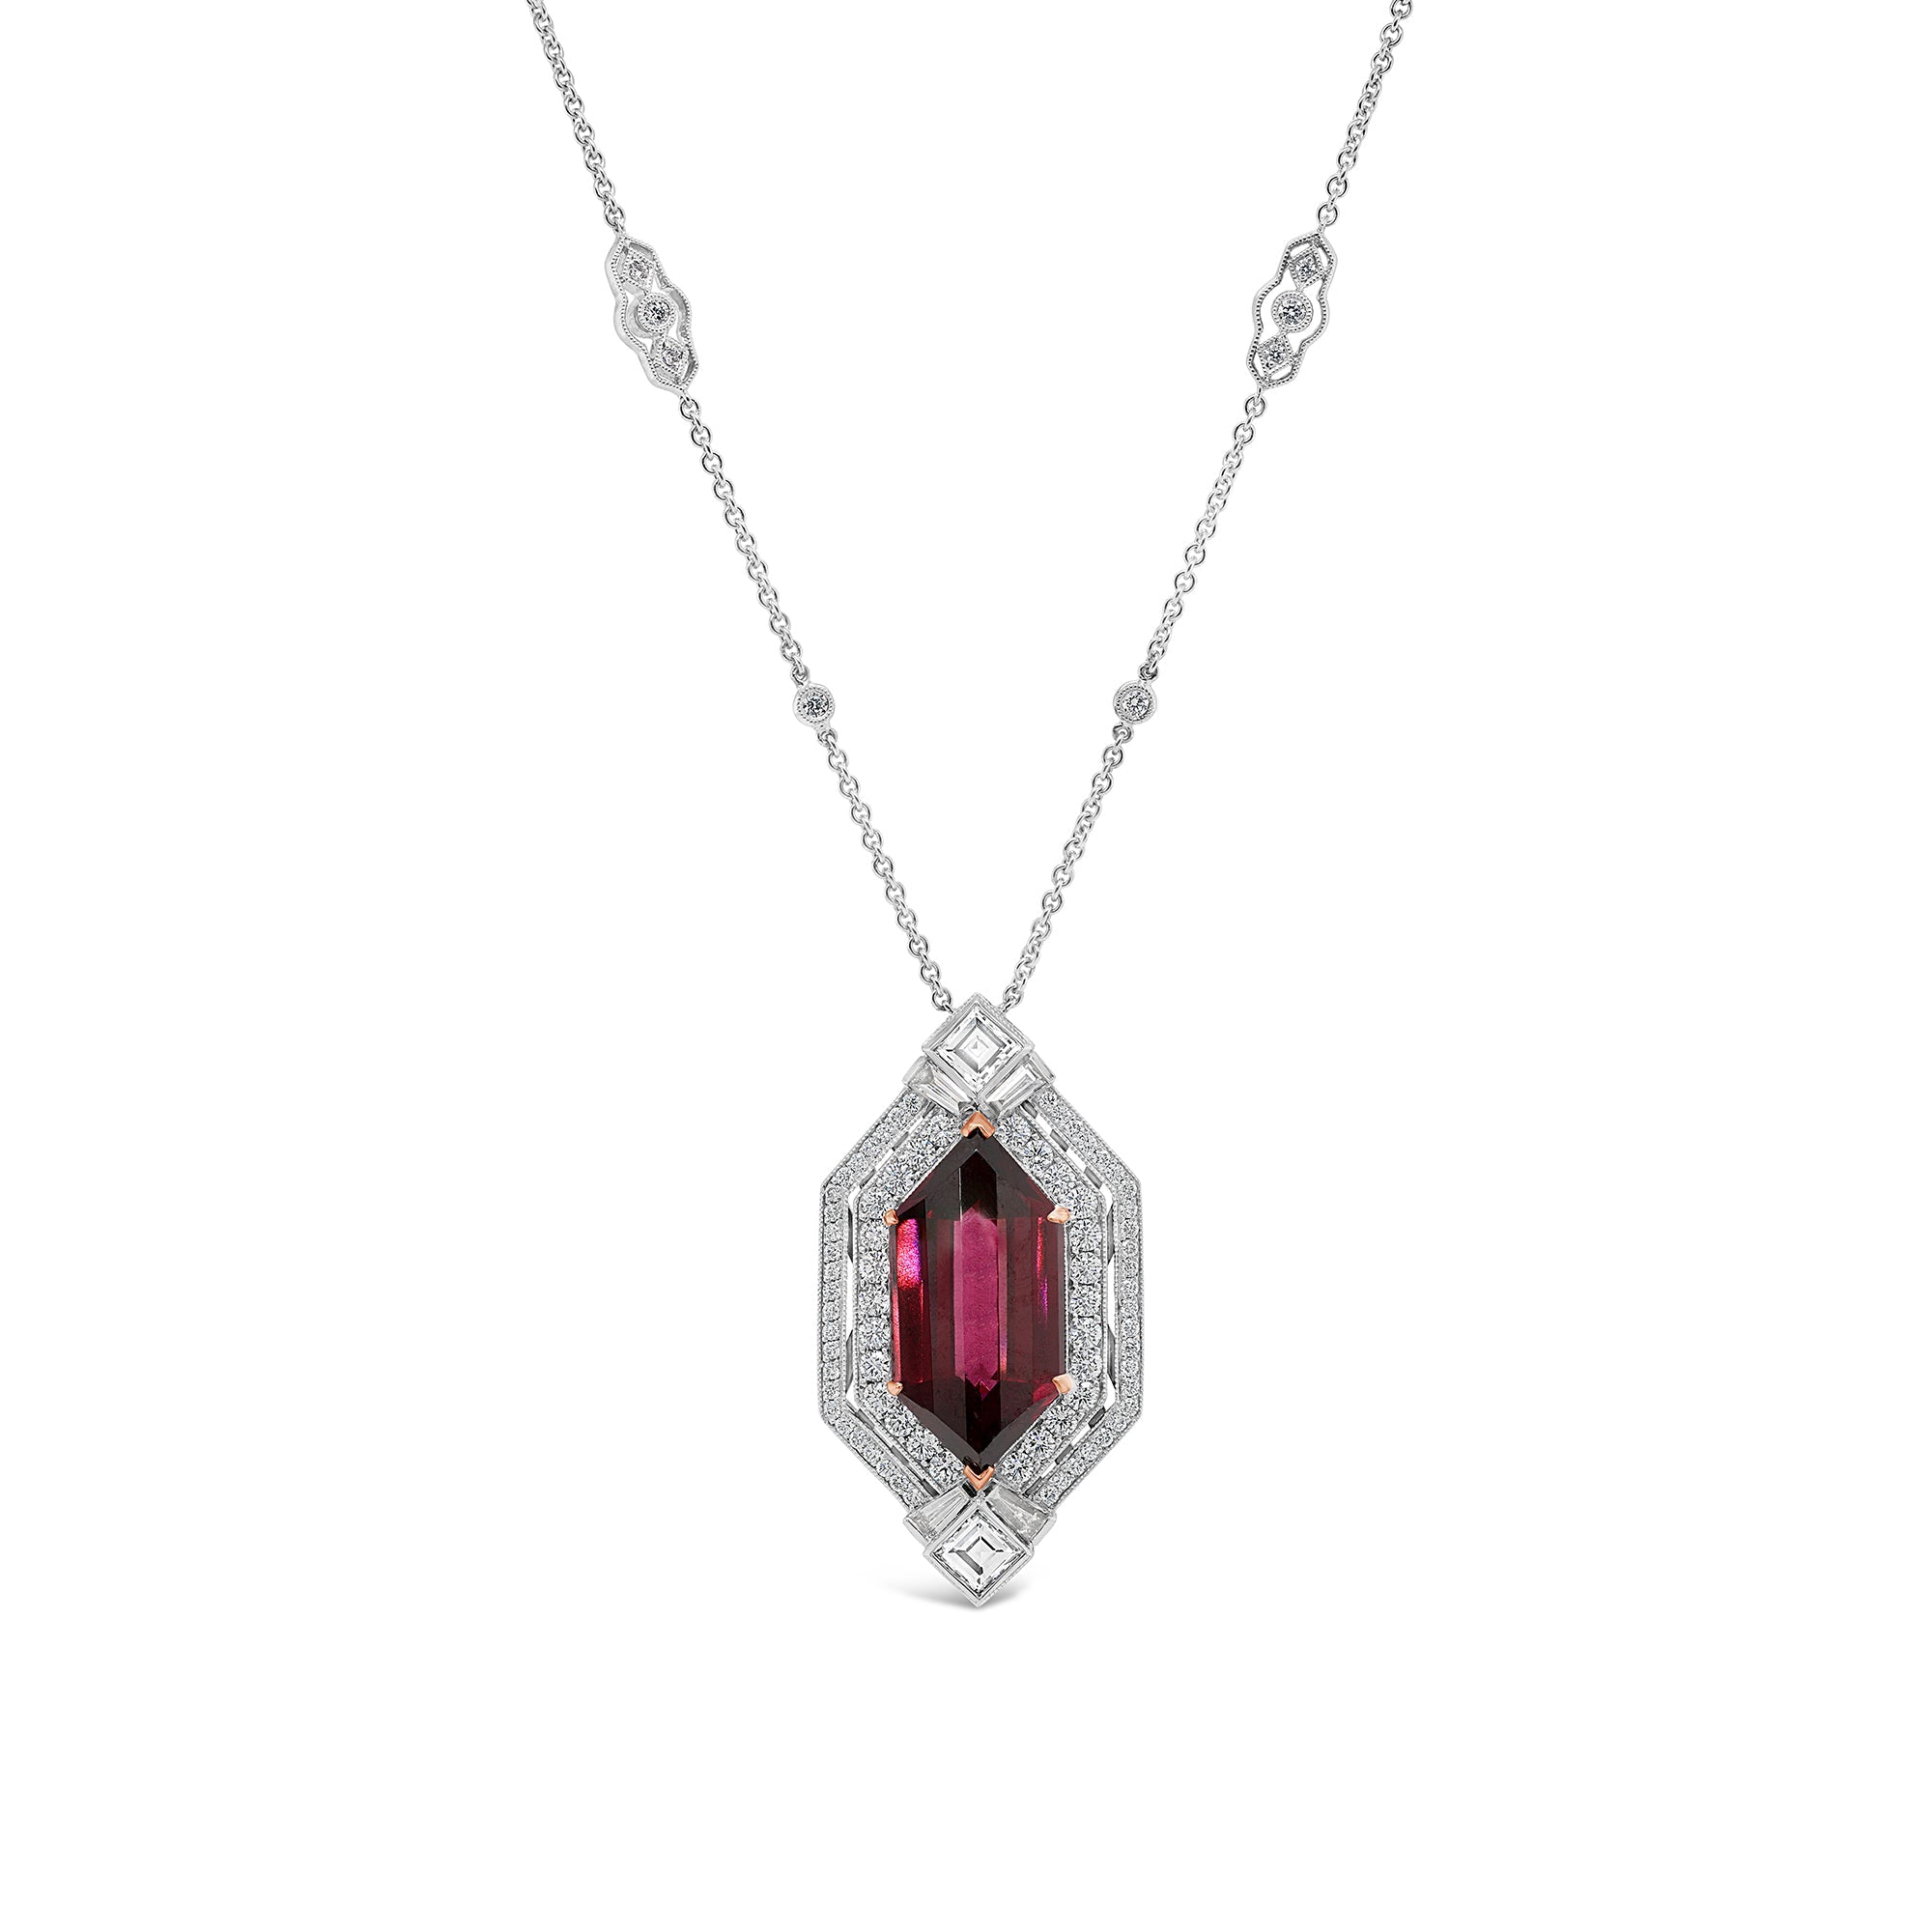 Garnet and diamond necklace